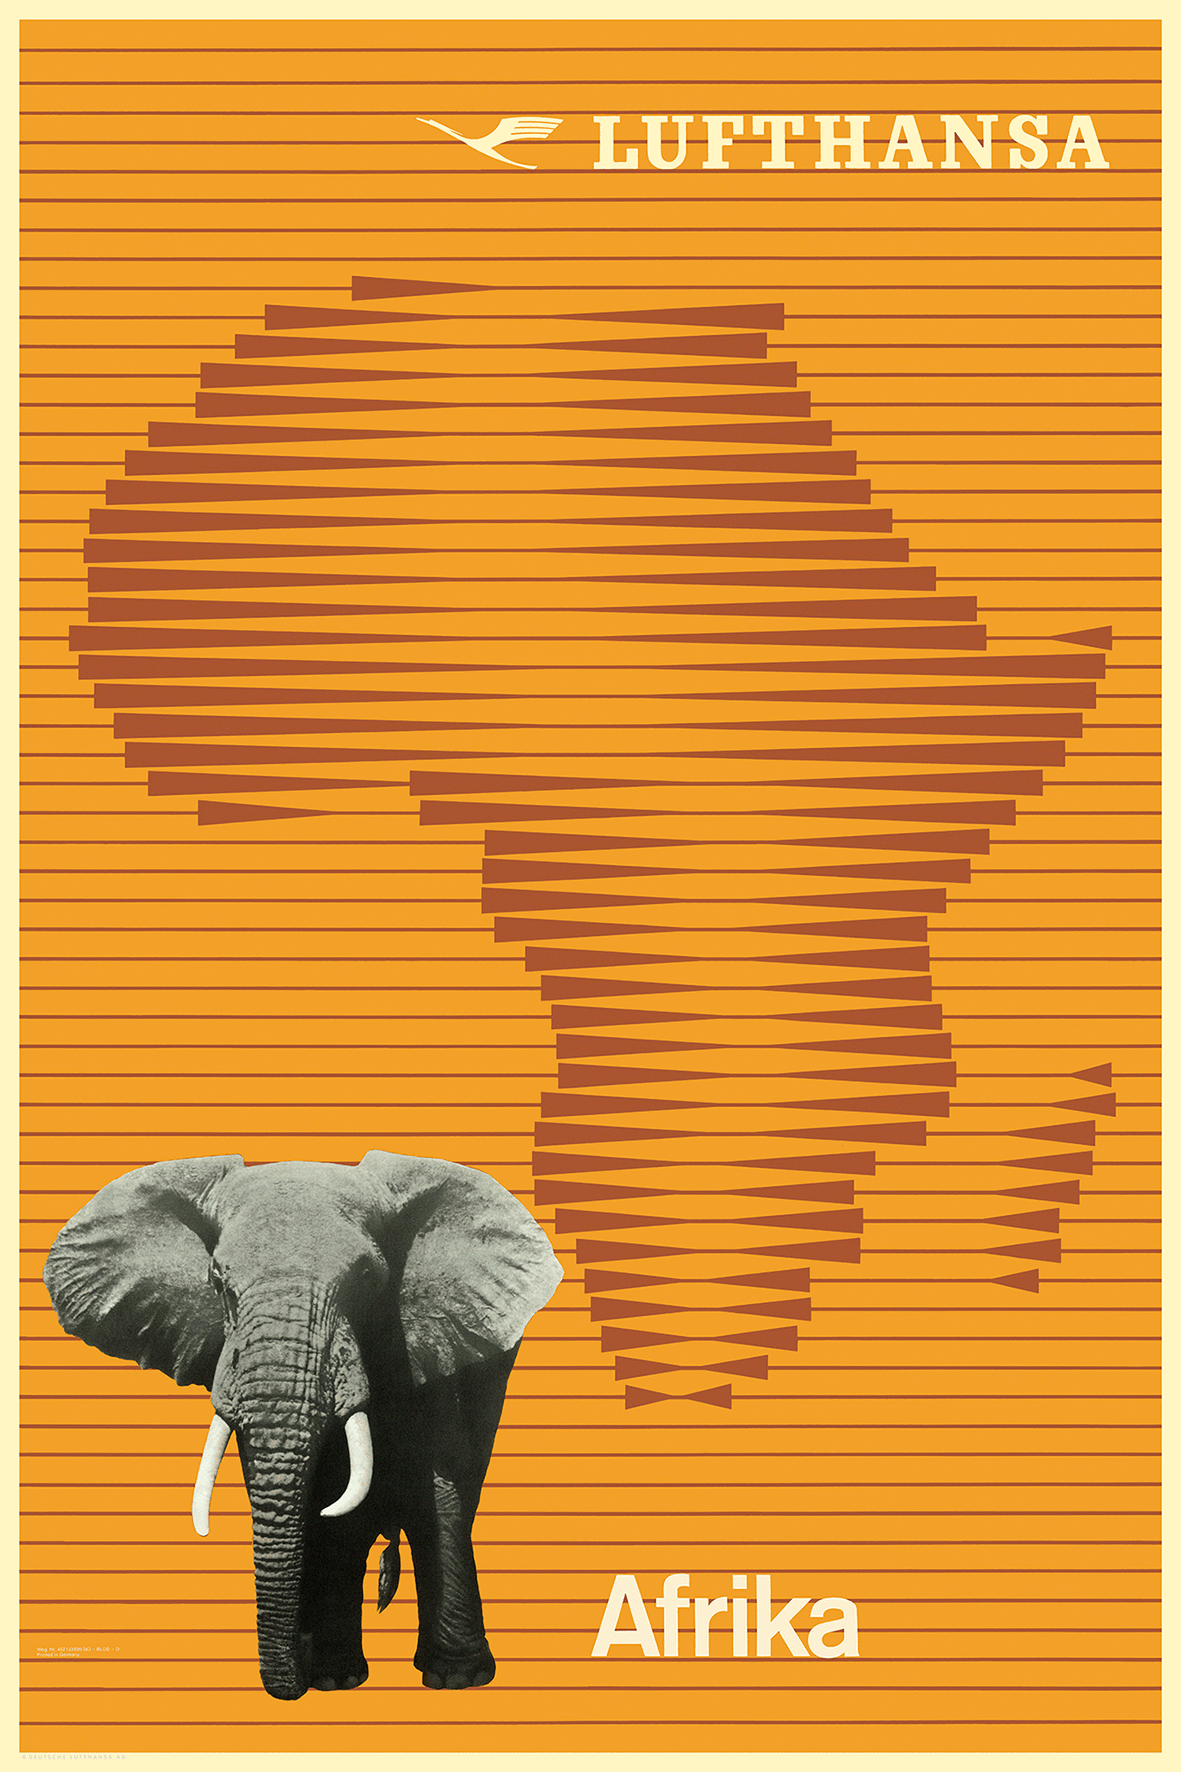 Lufthansa, Africa [Elephant]